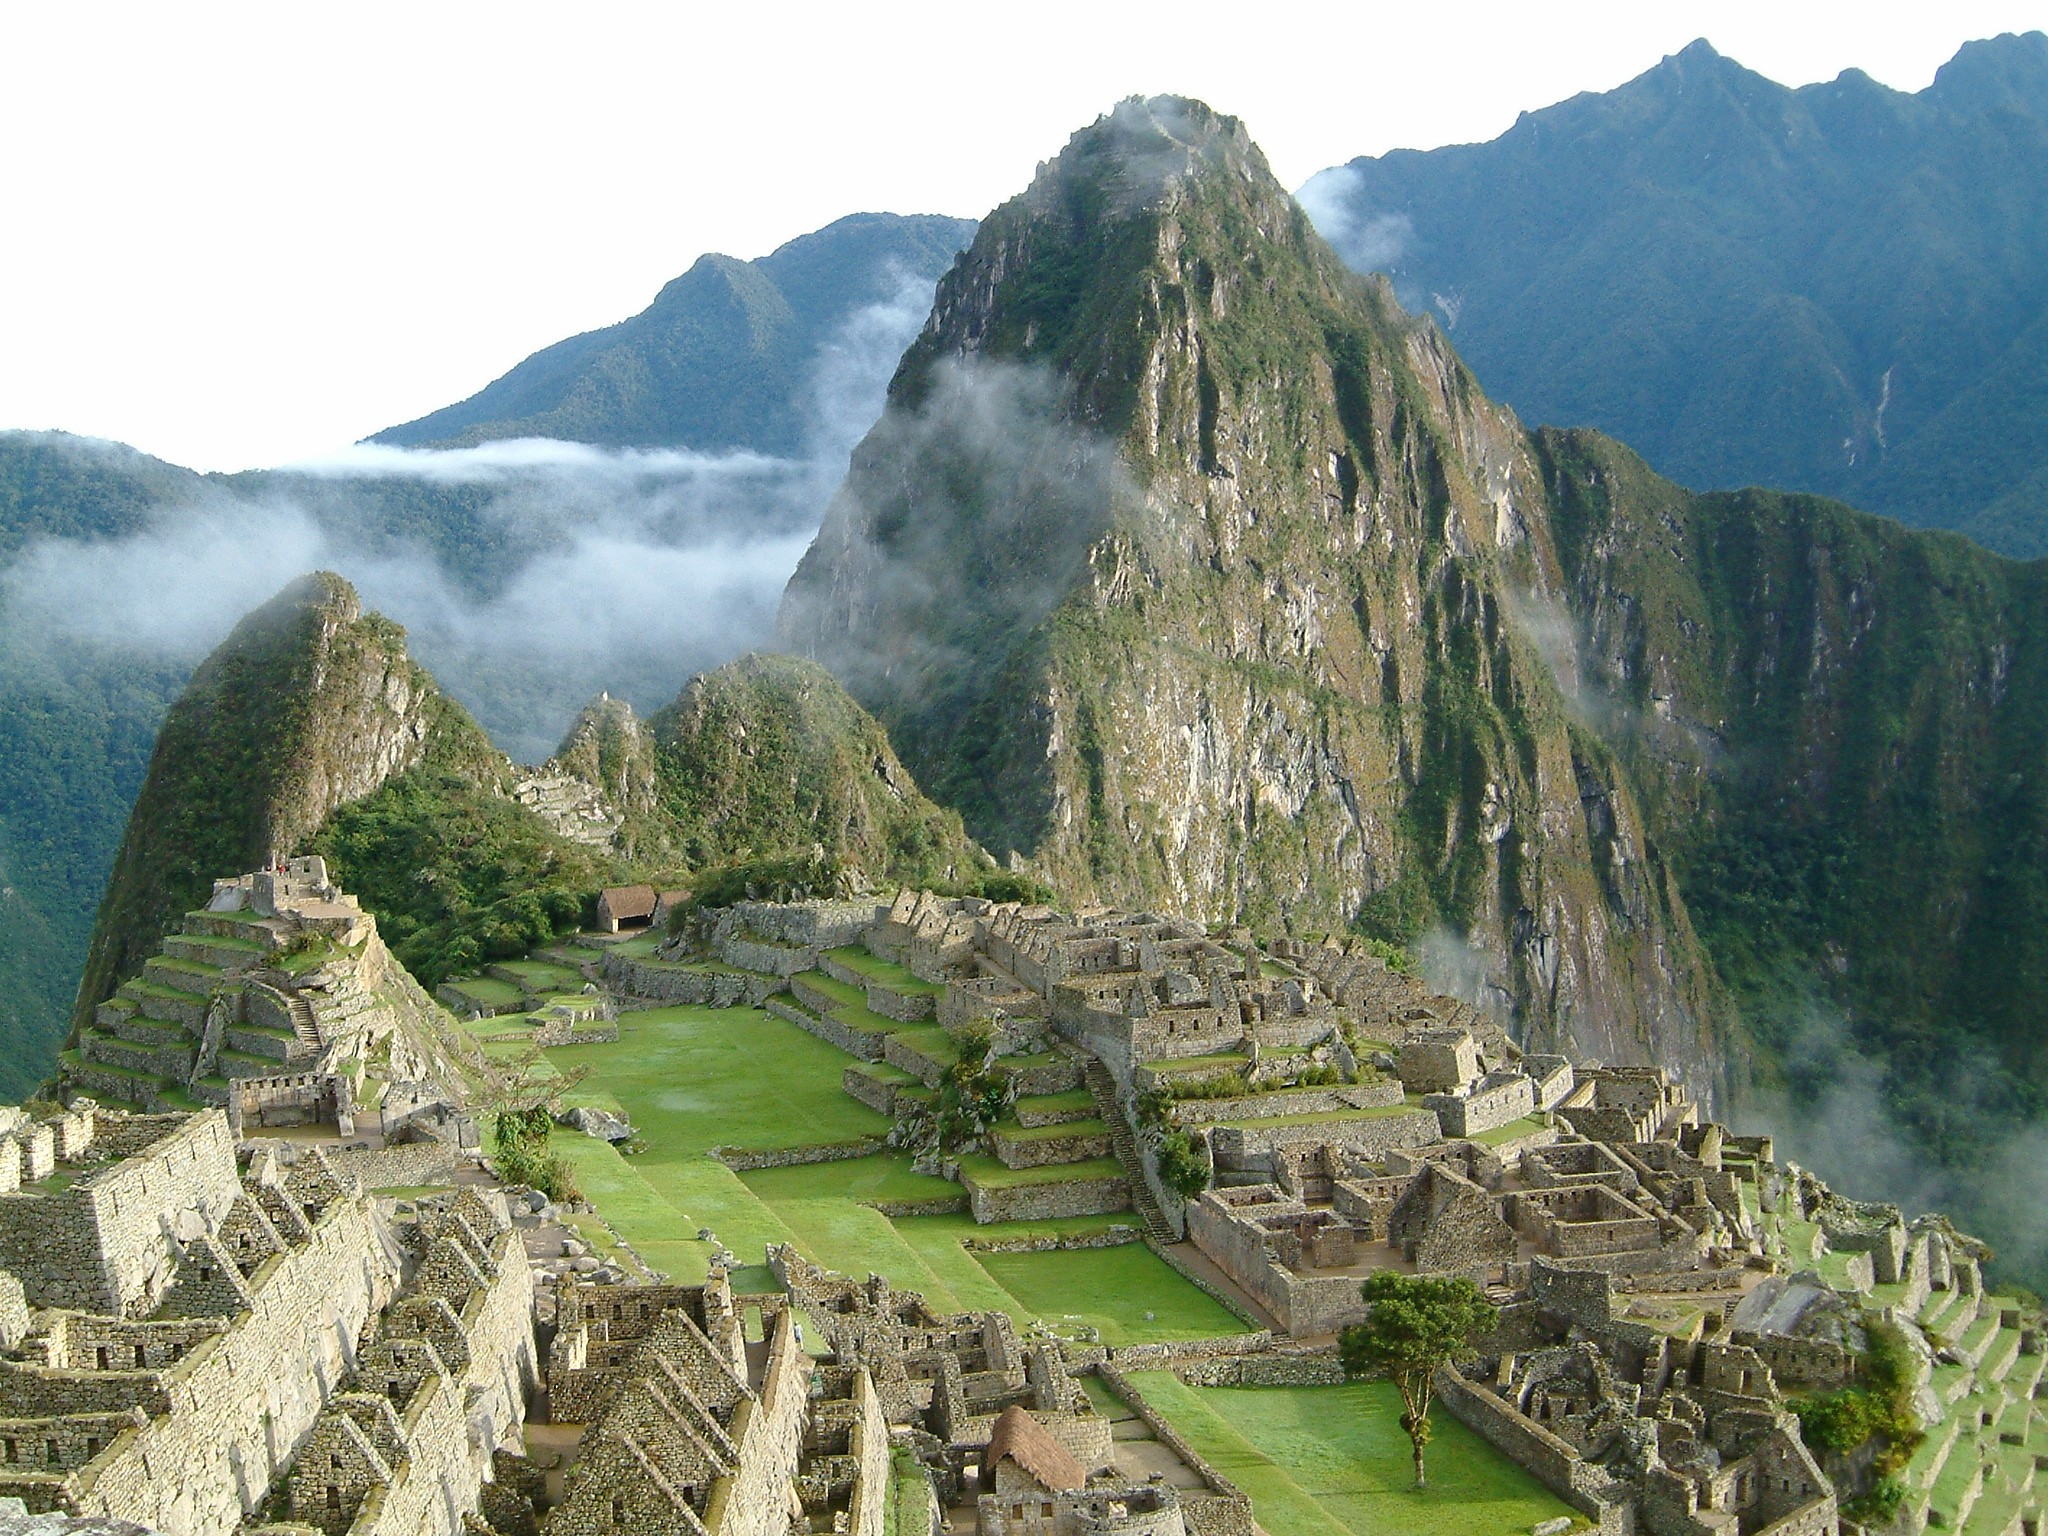 General 2048x1536 Peru Machu Picchu mountains mist architecture Inca South America ancient ruins history World Heritage Site landmark